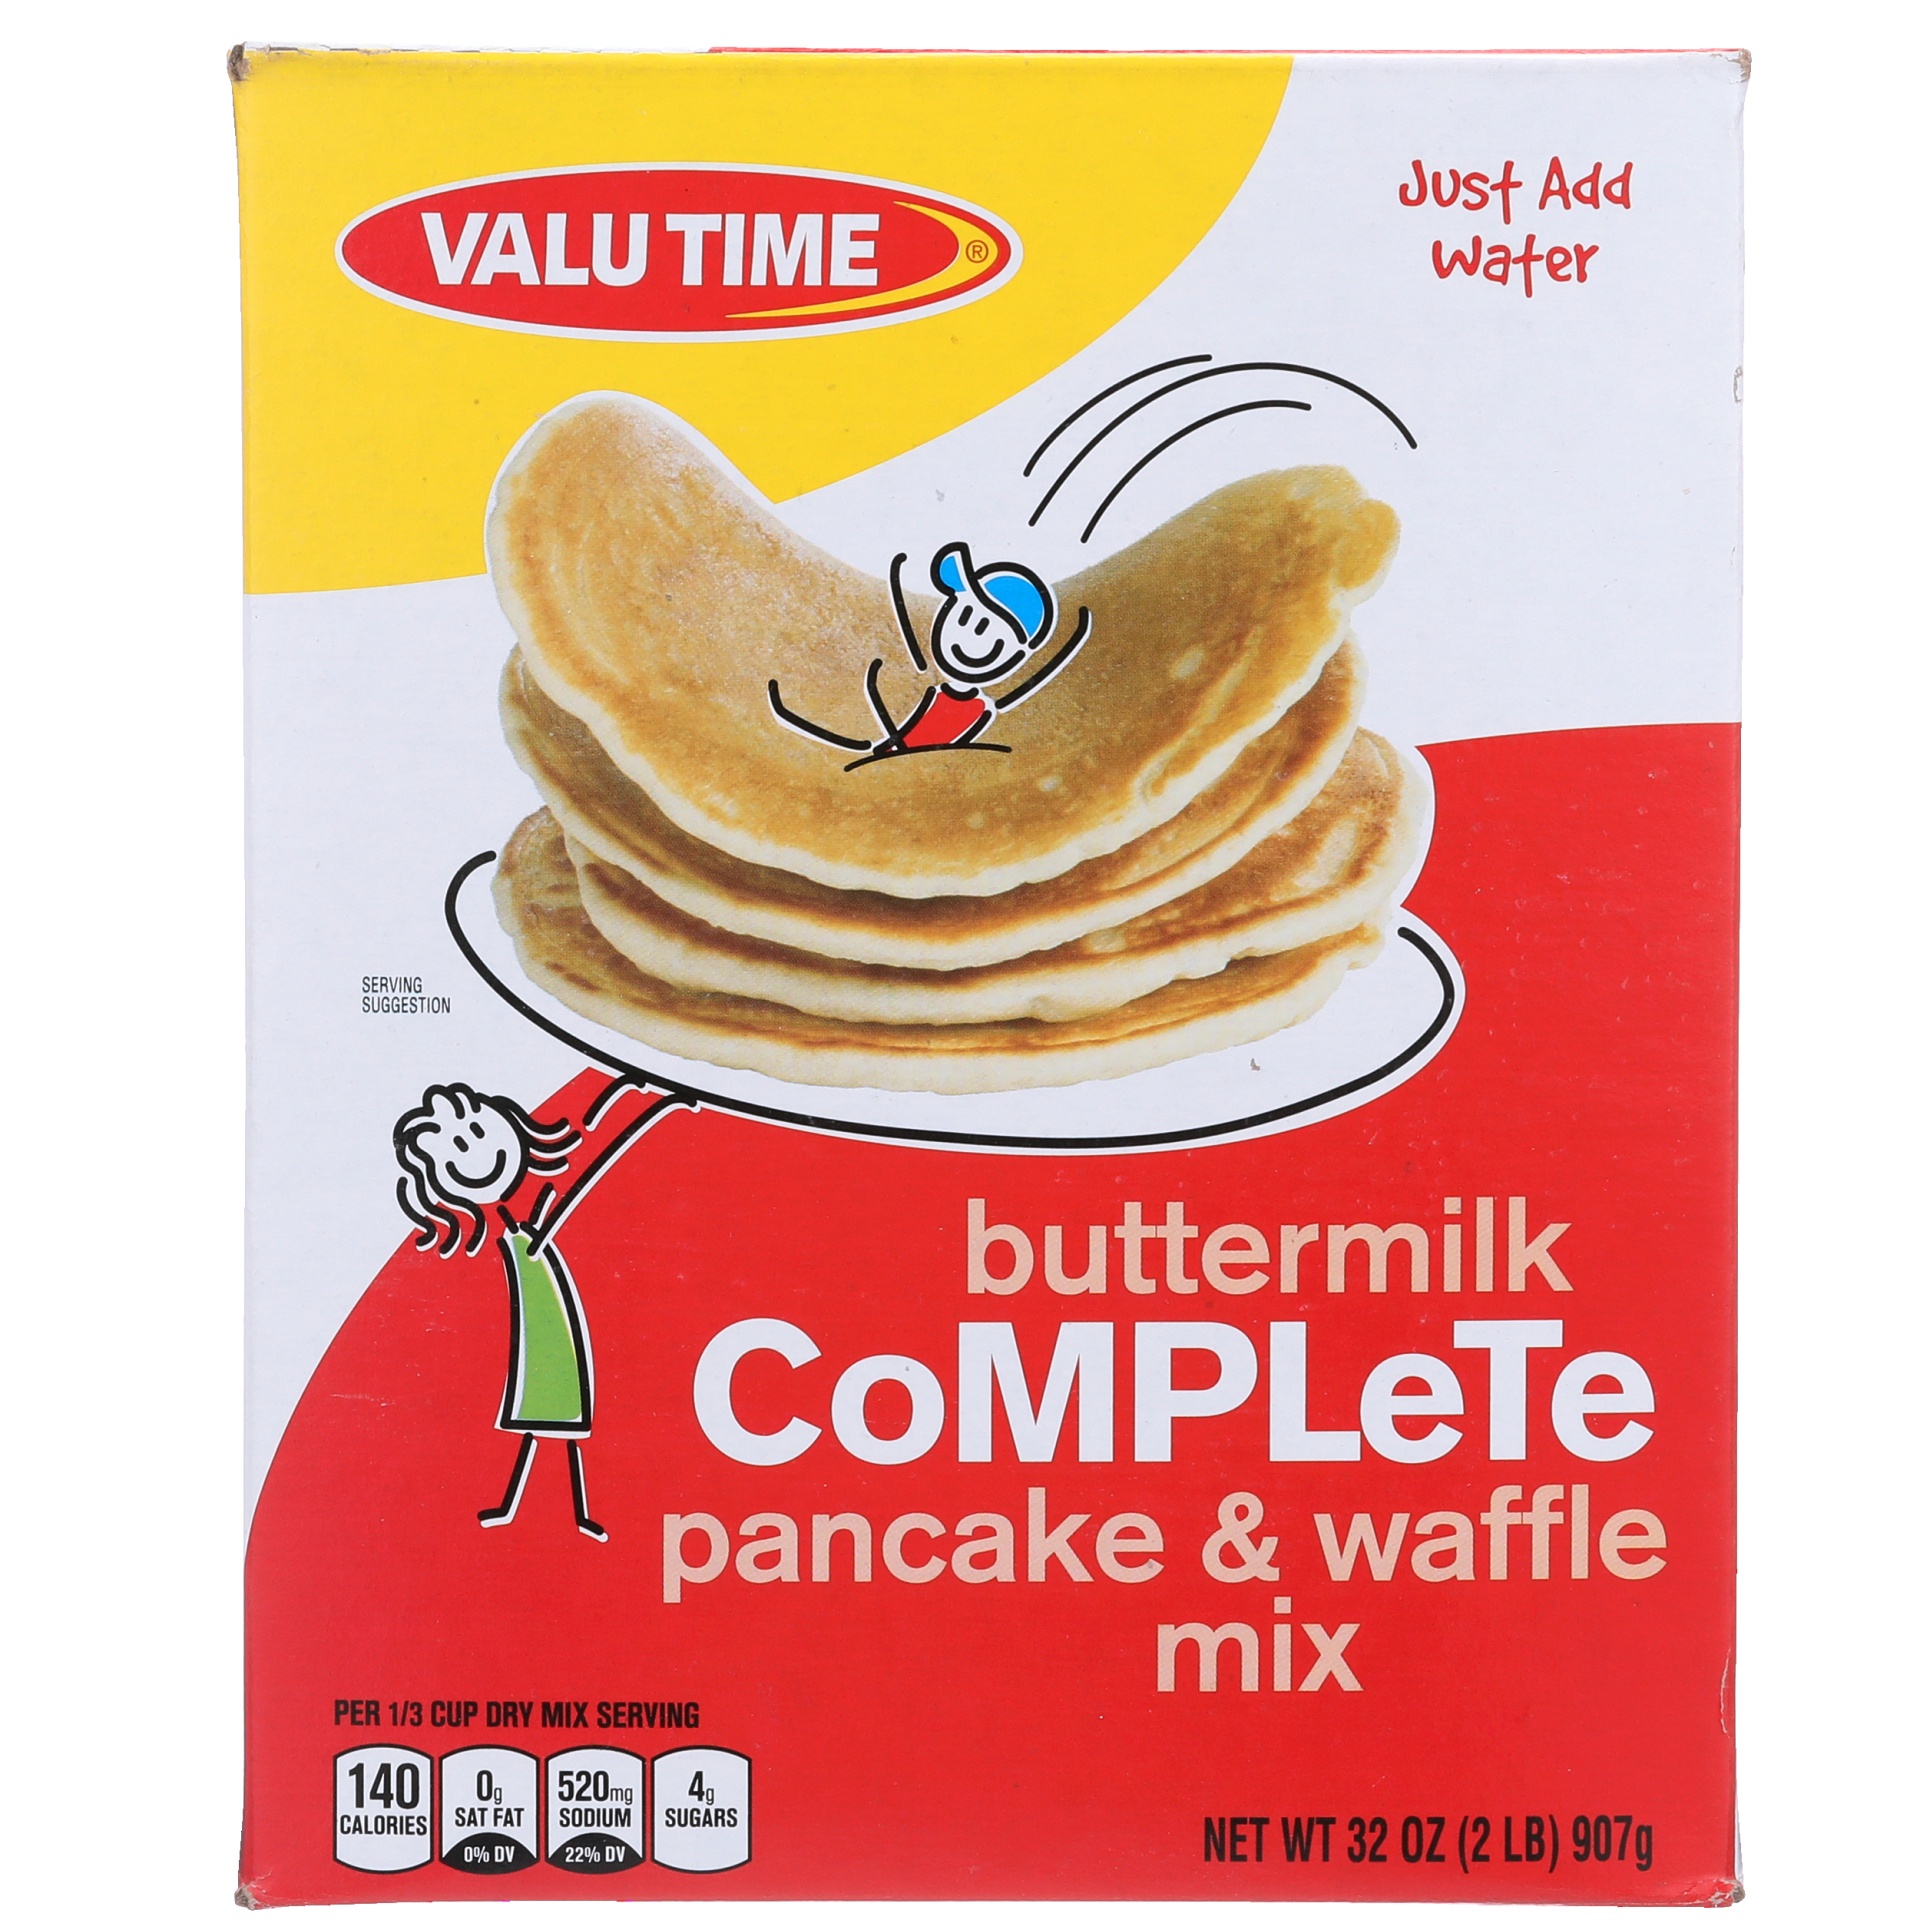 slide 1 of 6, Valu Time Buttermilk Complete Pancake & Waffle Mix, 32 oz